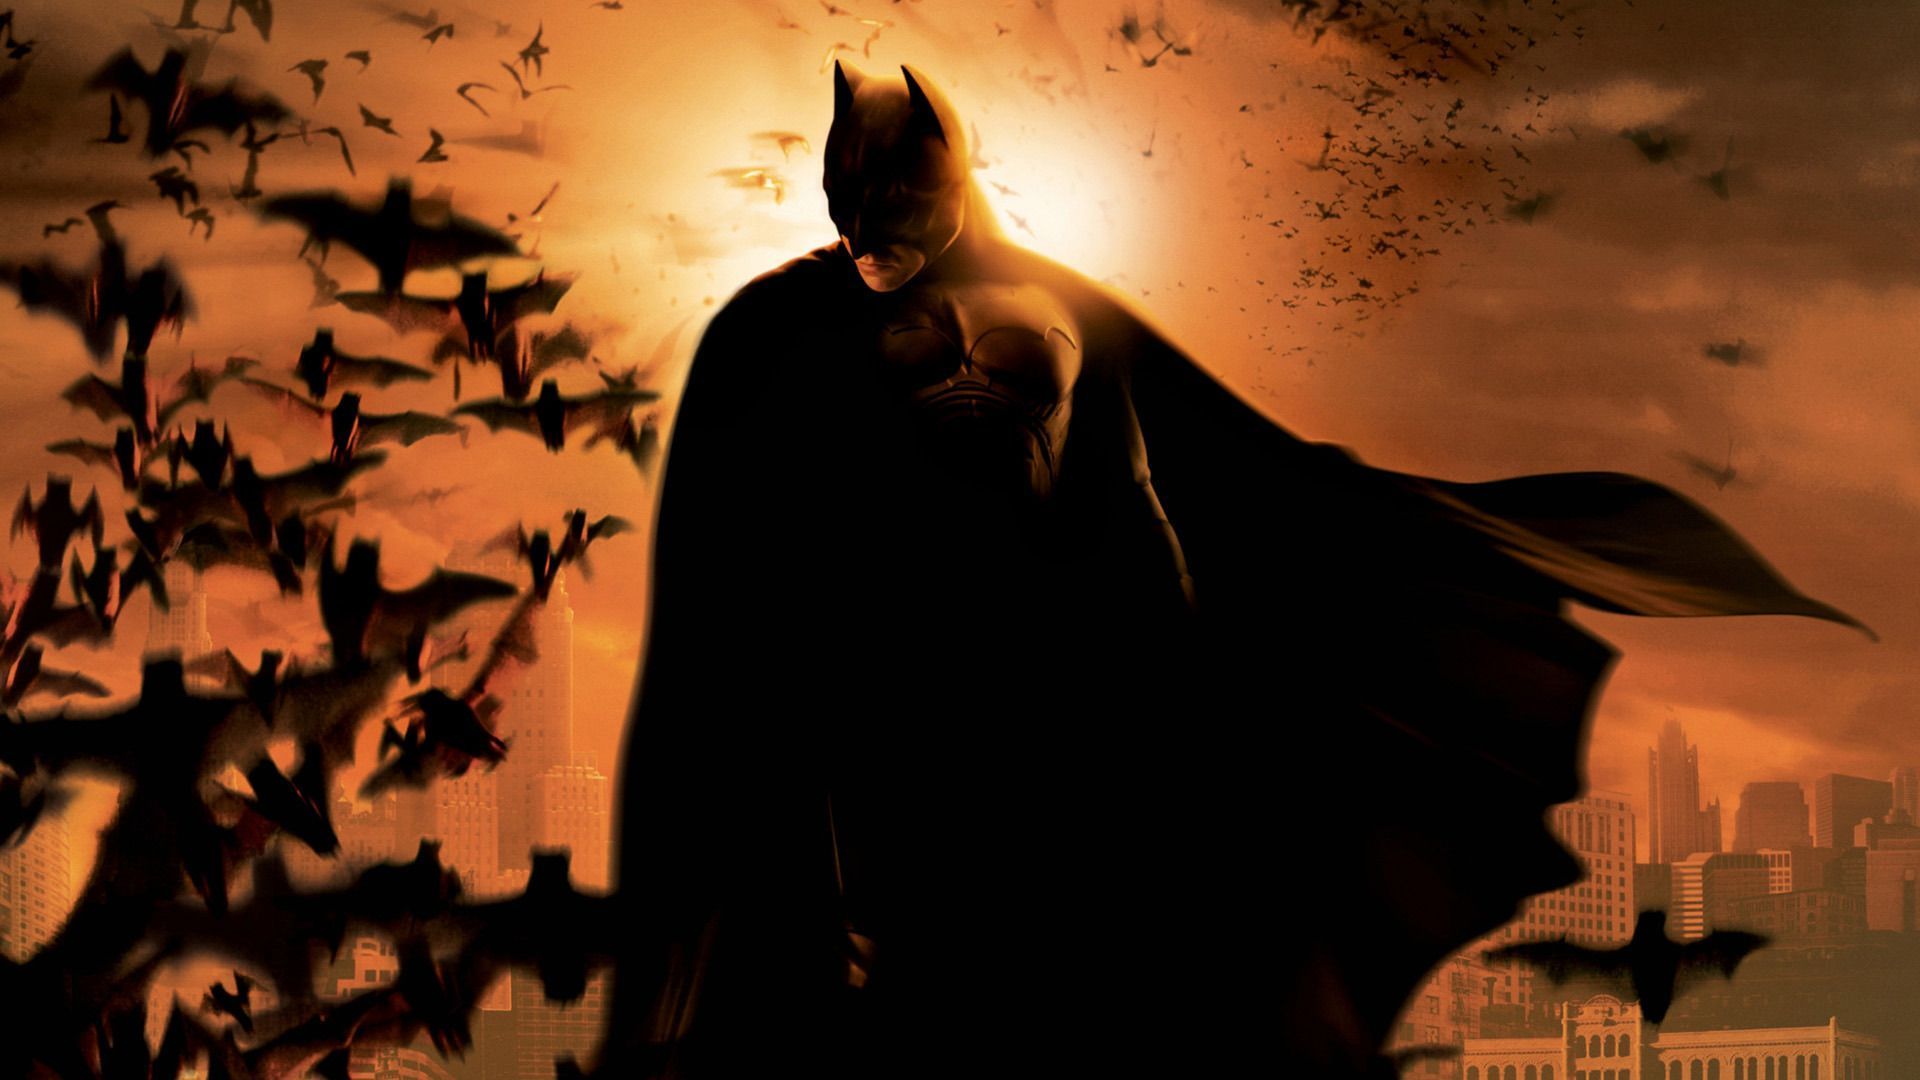 Batman HD Wallpaper For Mobile and Desktop #1 - One Punch Man